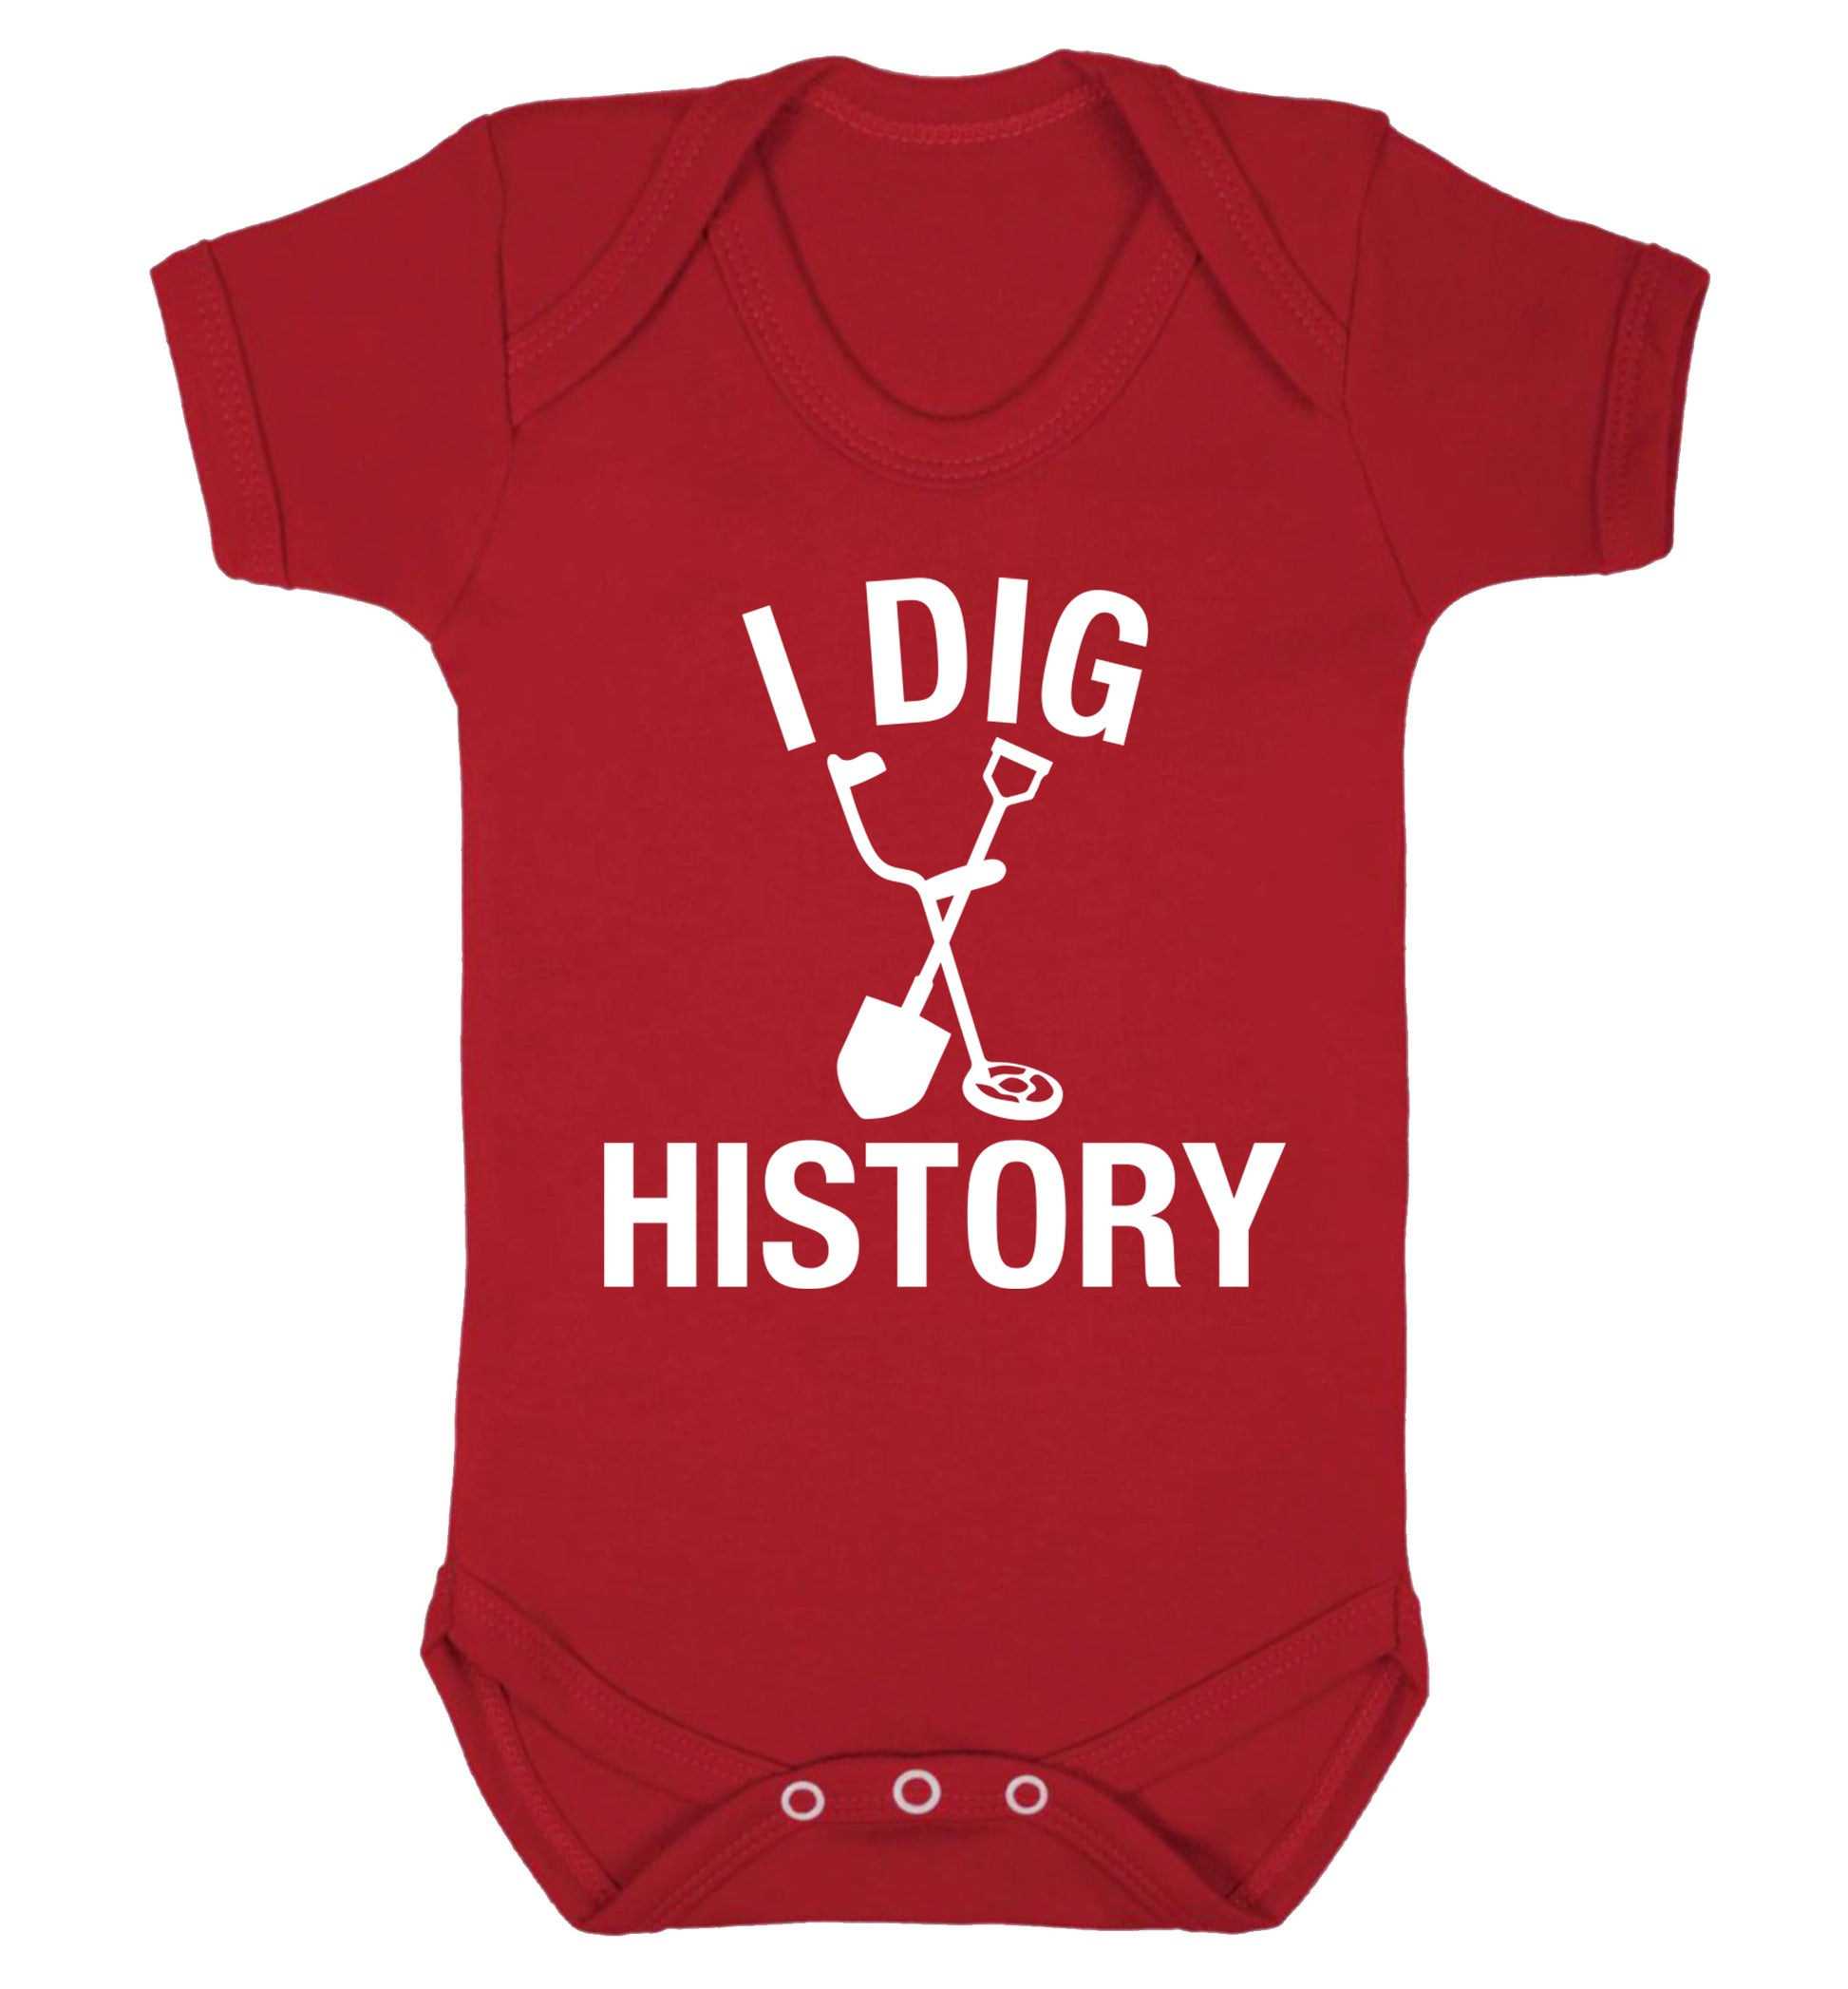 I dig history Baby Vest red 18-24 months